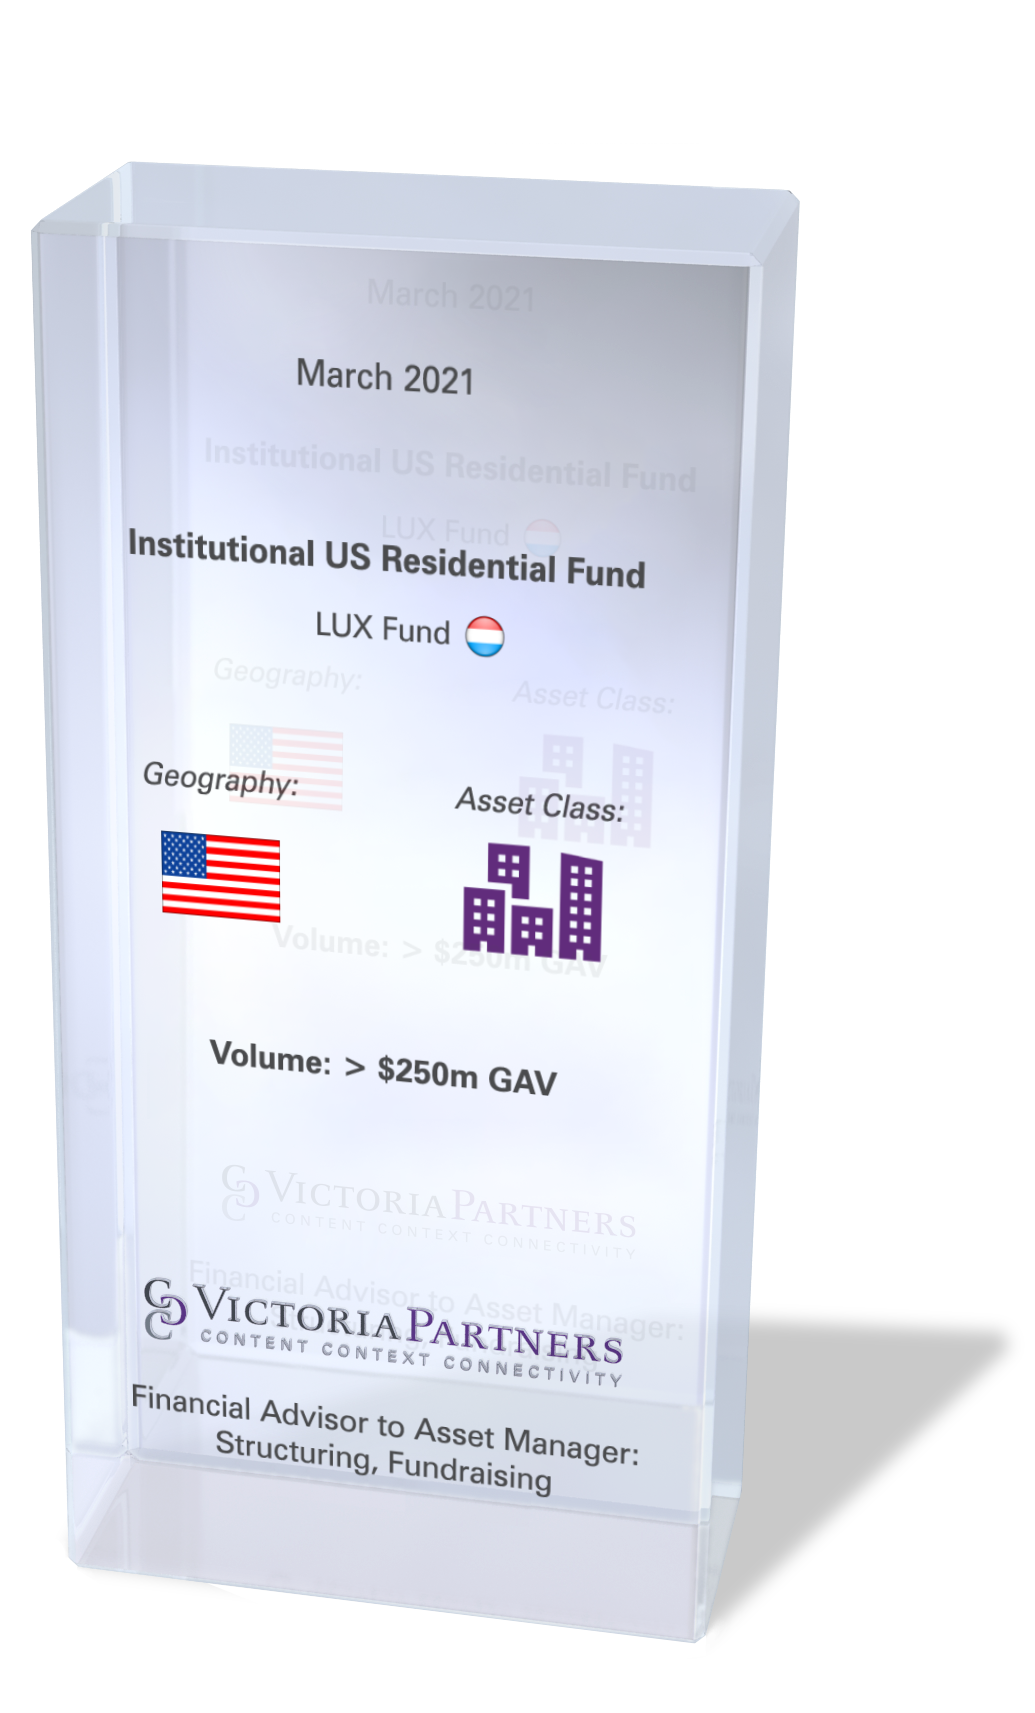 VICTORIAPARTNERS - Financial Advisor to Asset Manager: Structuring, Fundraising in den Vereinigten Staaten - March 2021